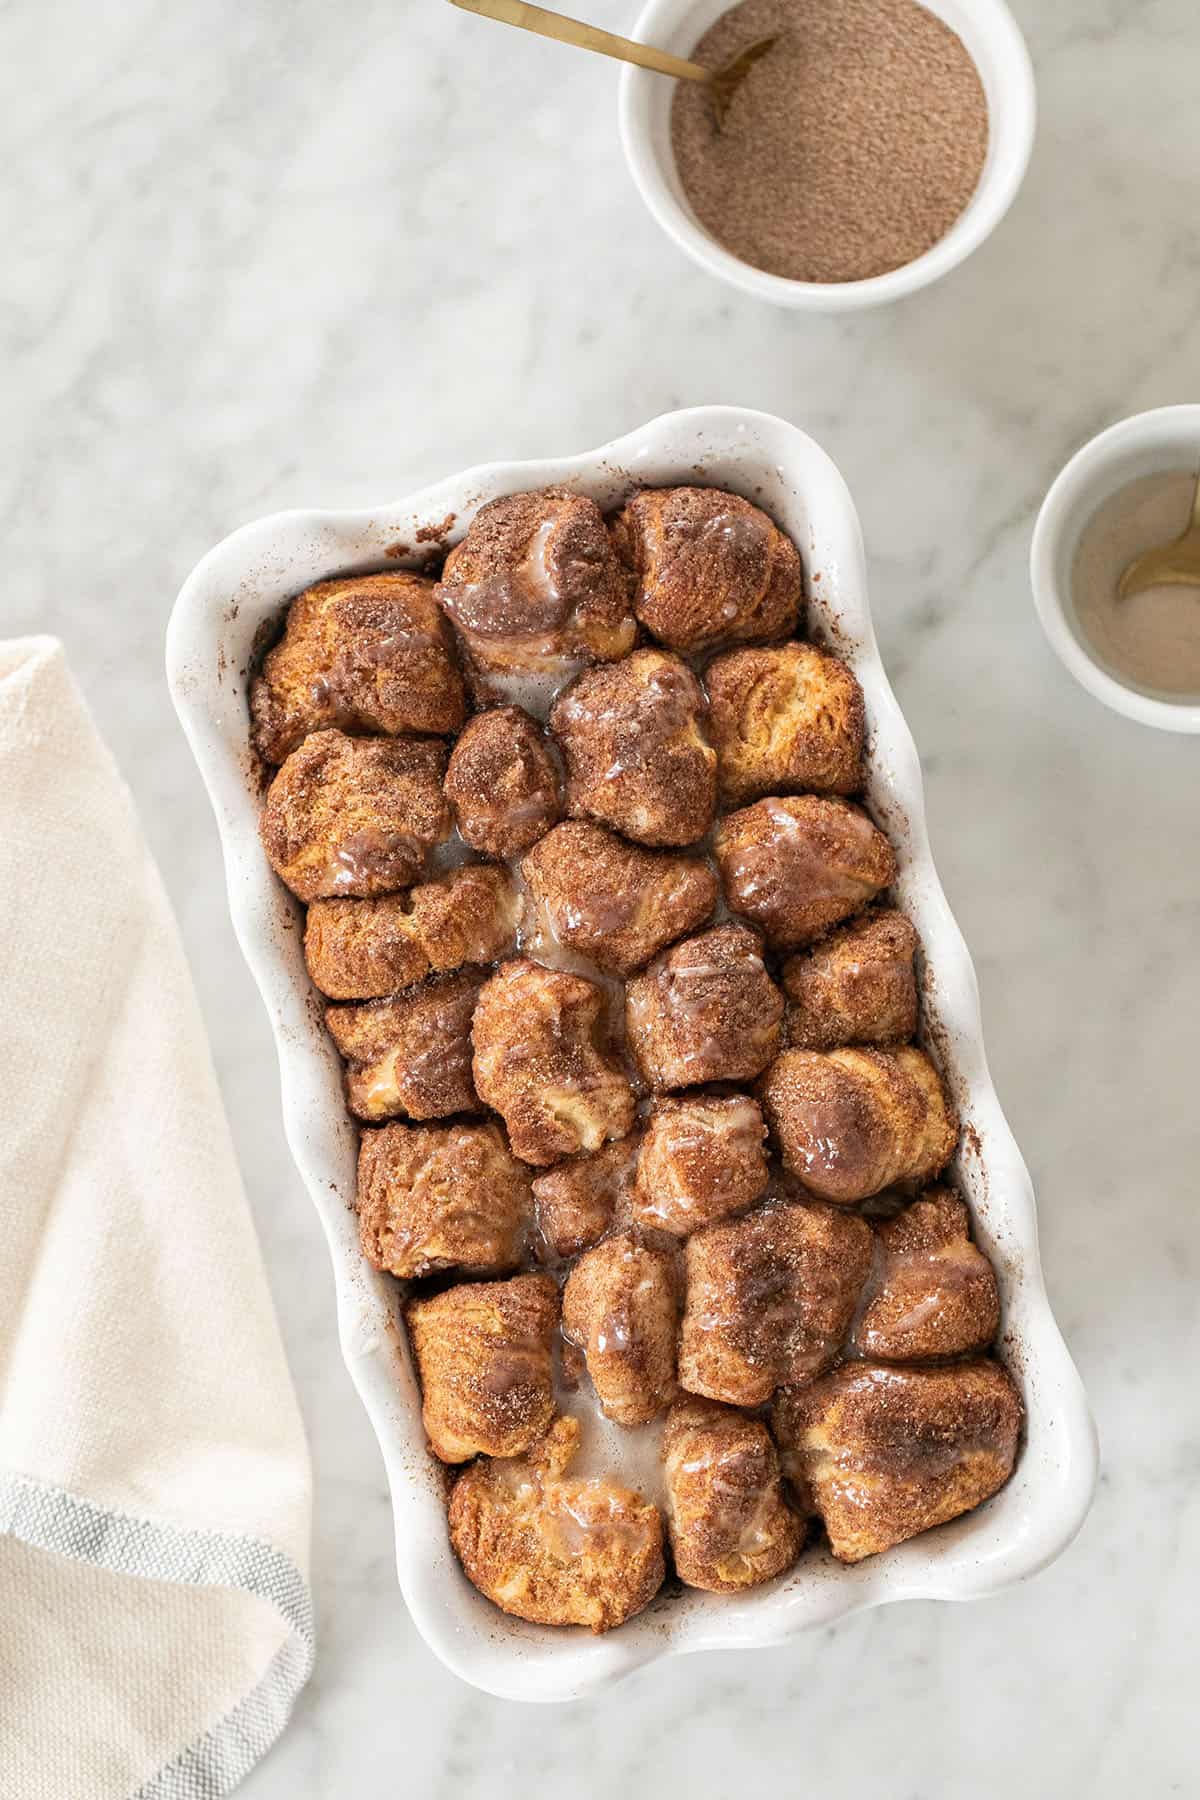 easy monkey bread recipe - cinnamon sugar, bundt pan, baking sheet, whole family, fluted tube pan, brown sugar, biscuit pieces